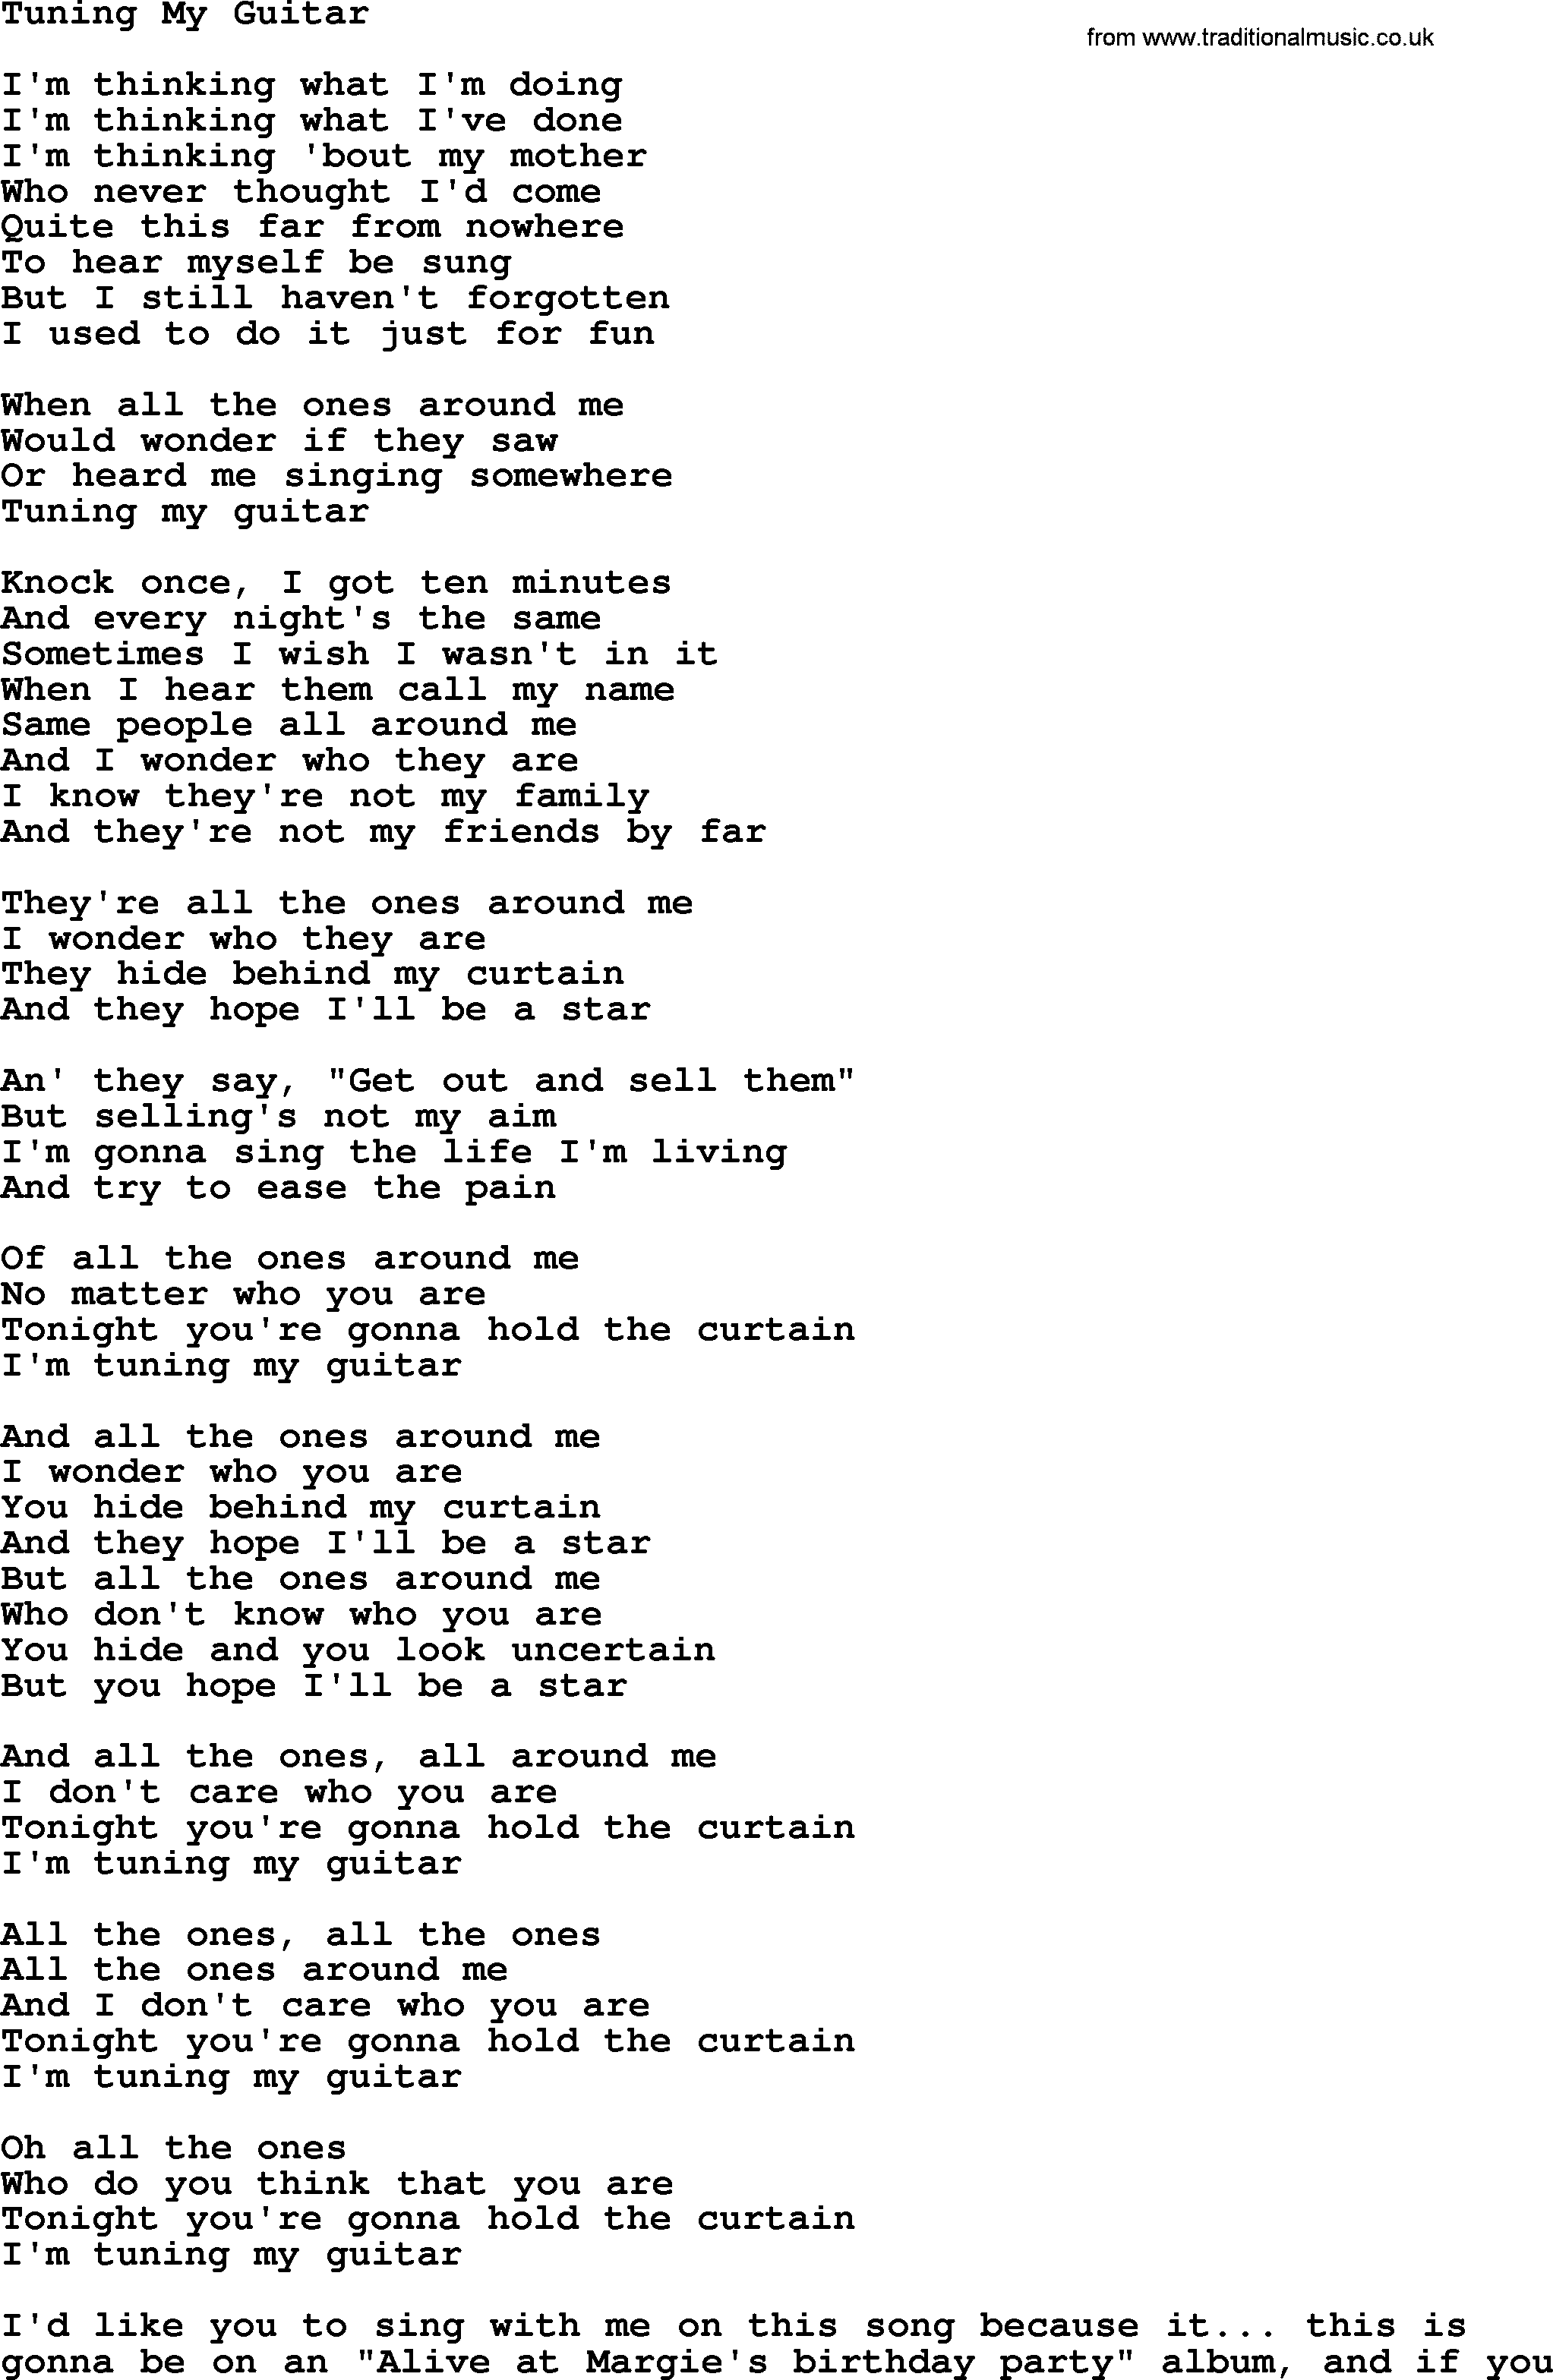 The Byrds song Tuning My Guitar, lyrics